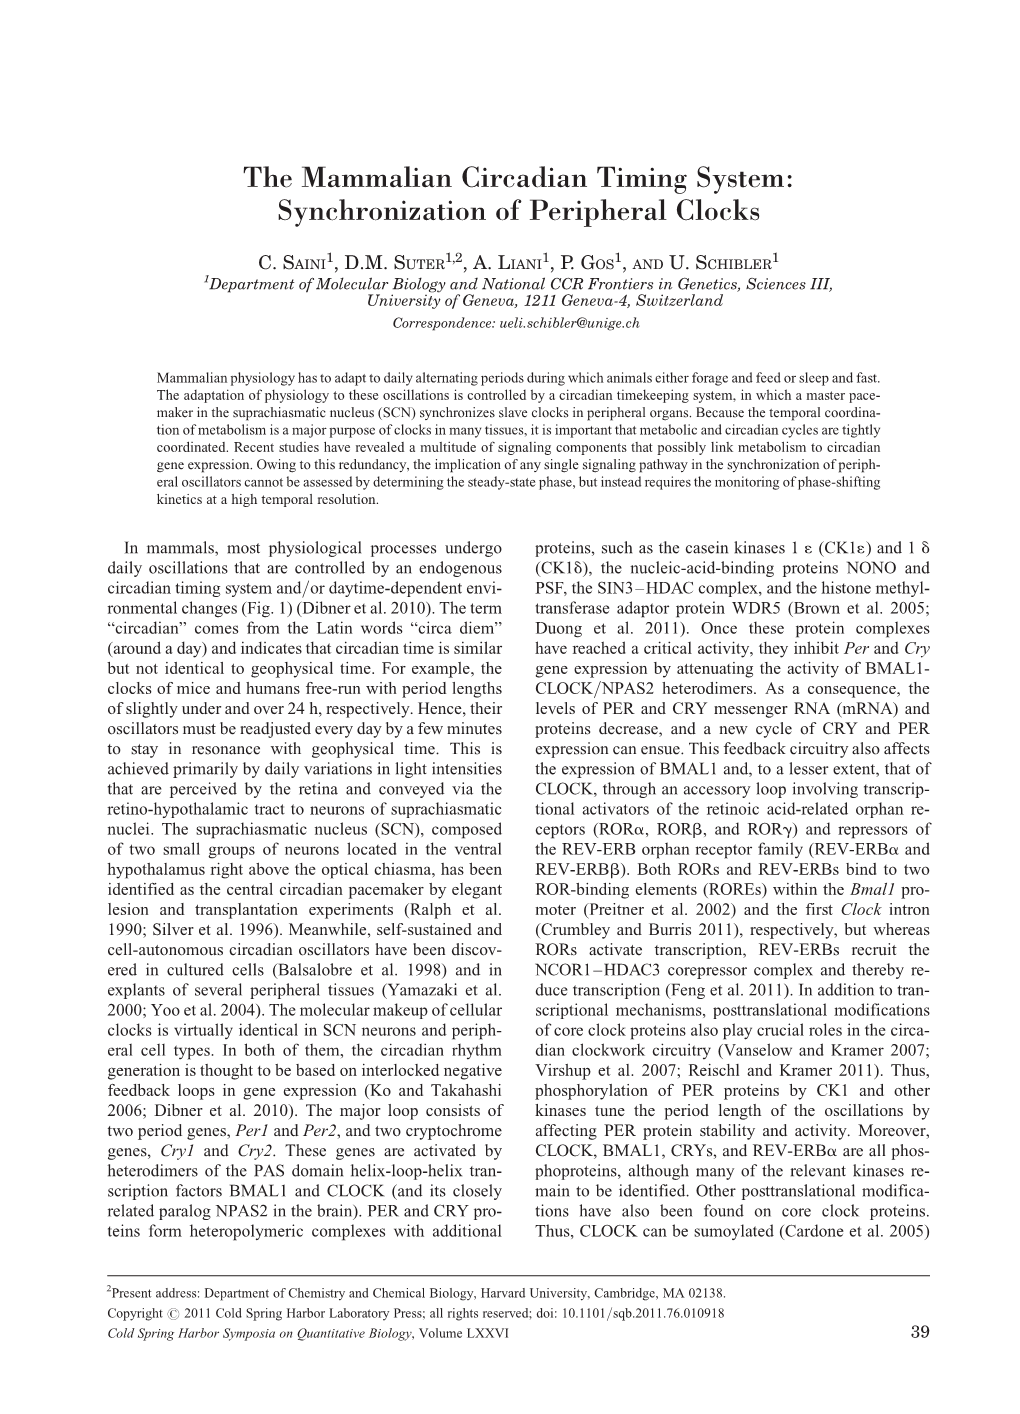 The Mammalian Circadian Timing System: Synchronization of Peripheral Clocks